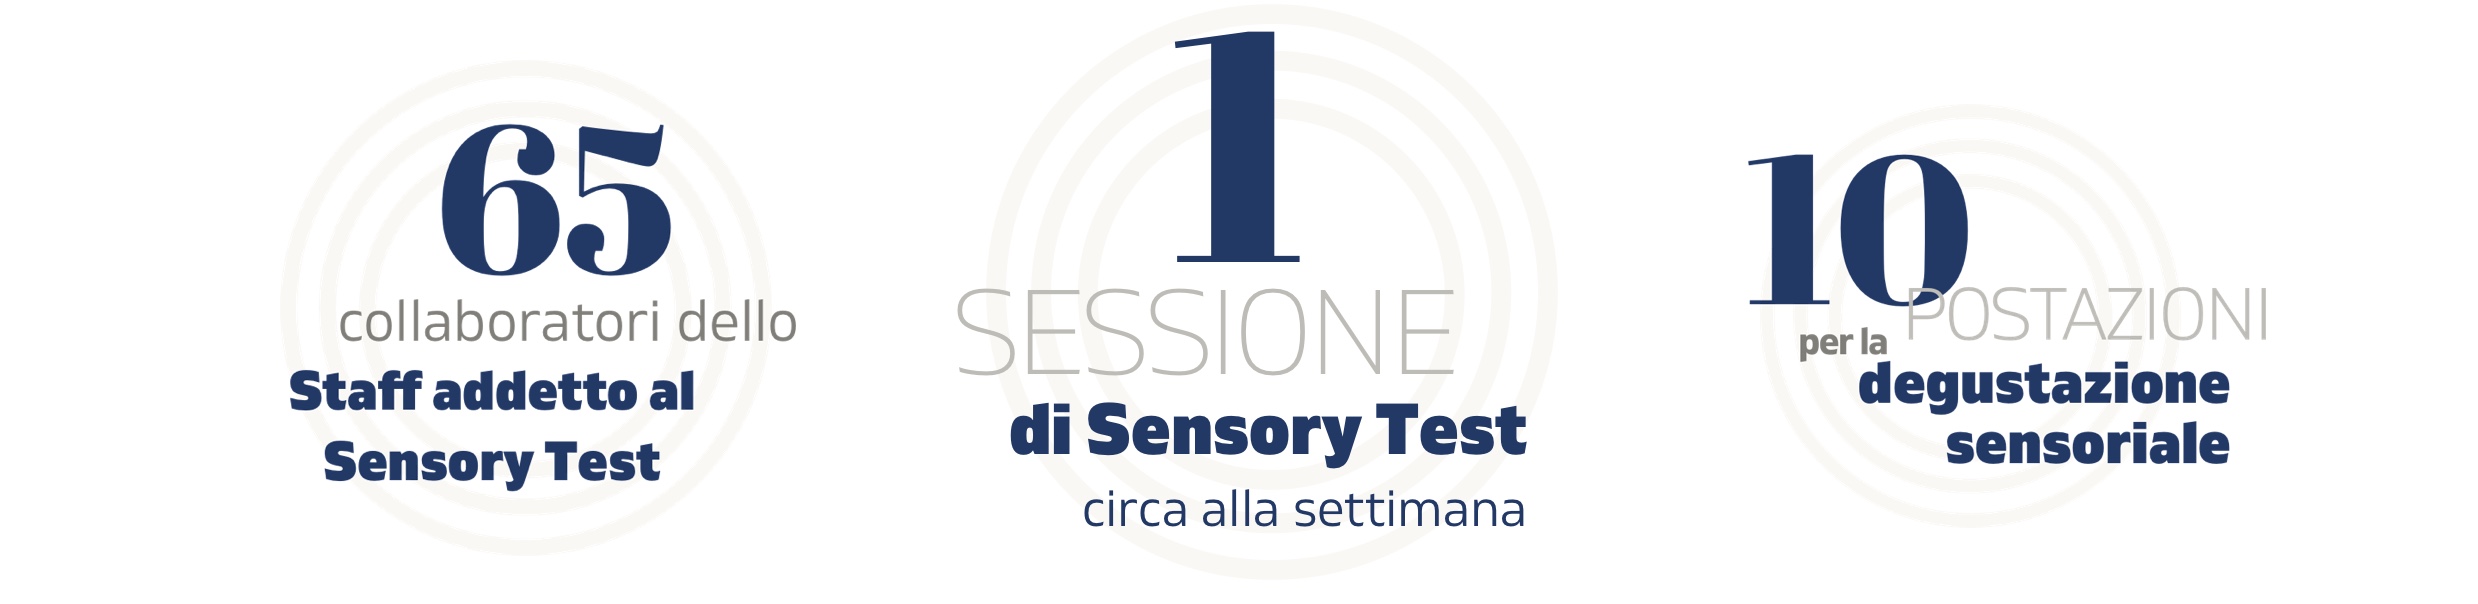 gruppo-veronesi-sensory-test